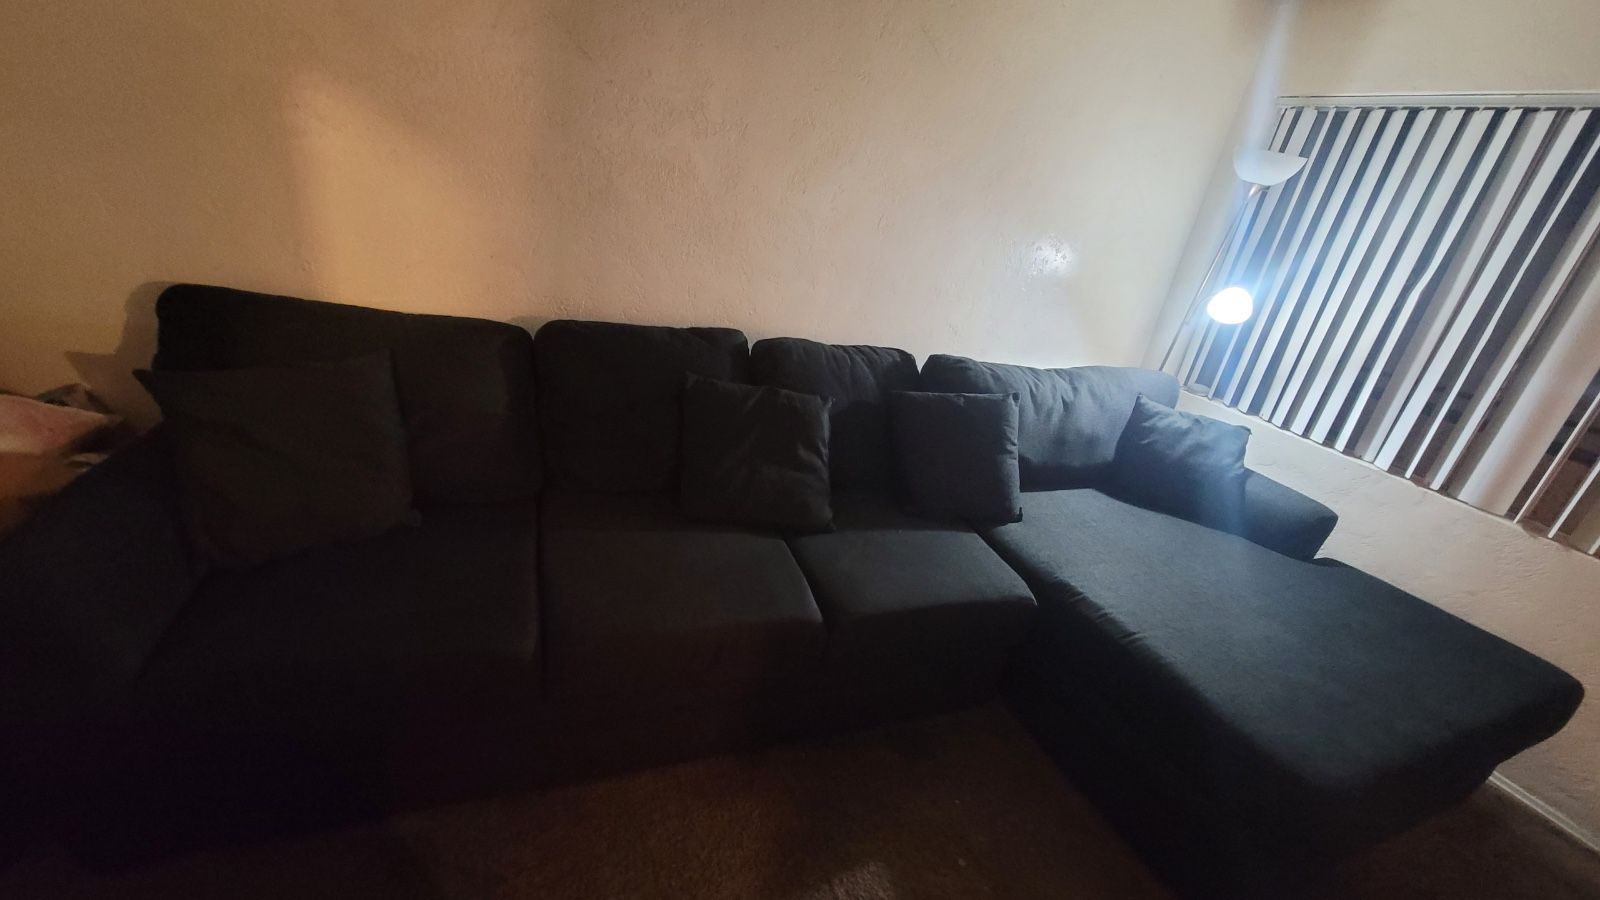 Black Sectional Sofa